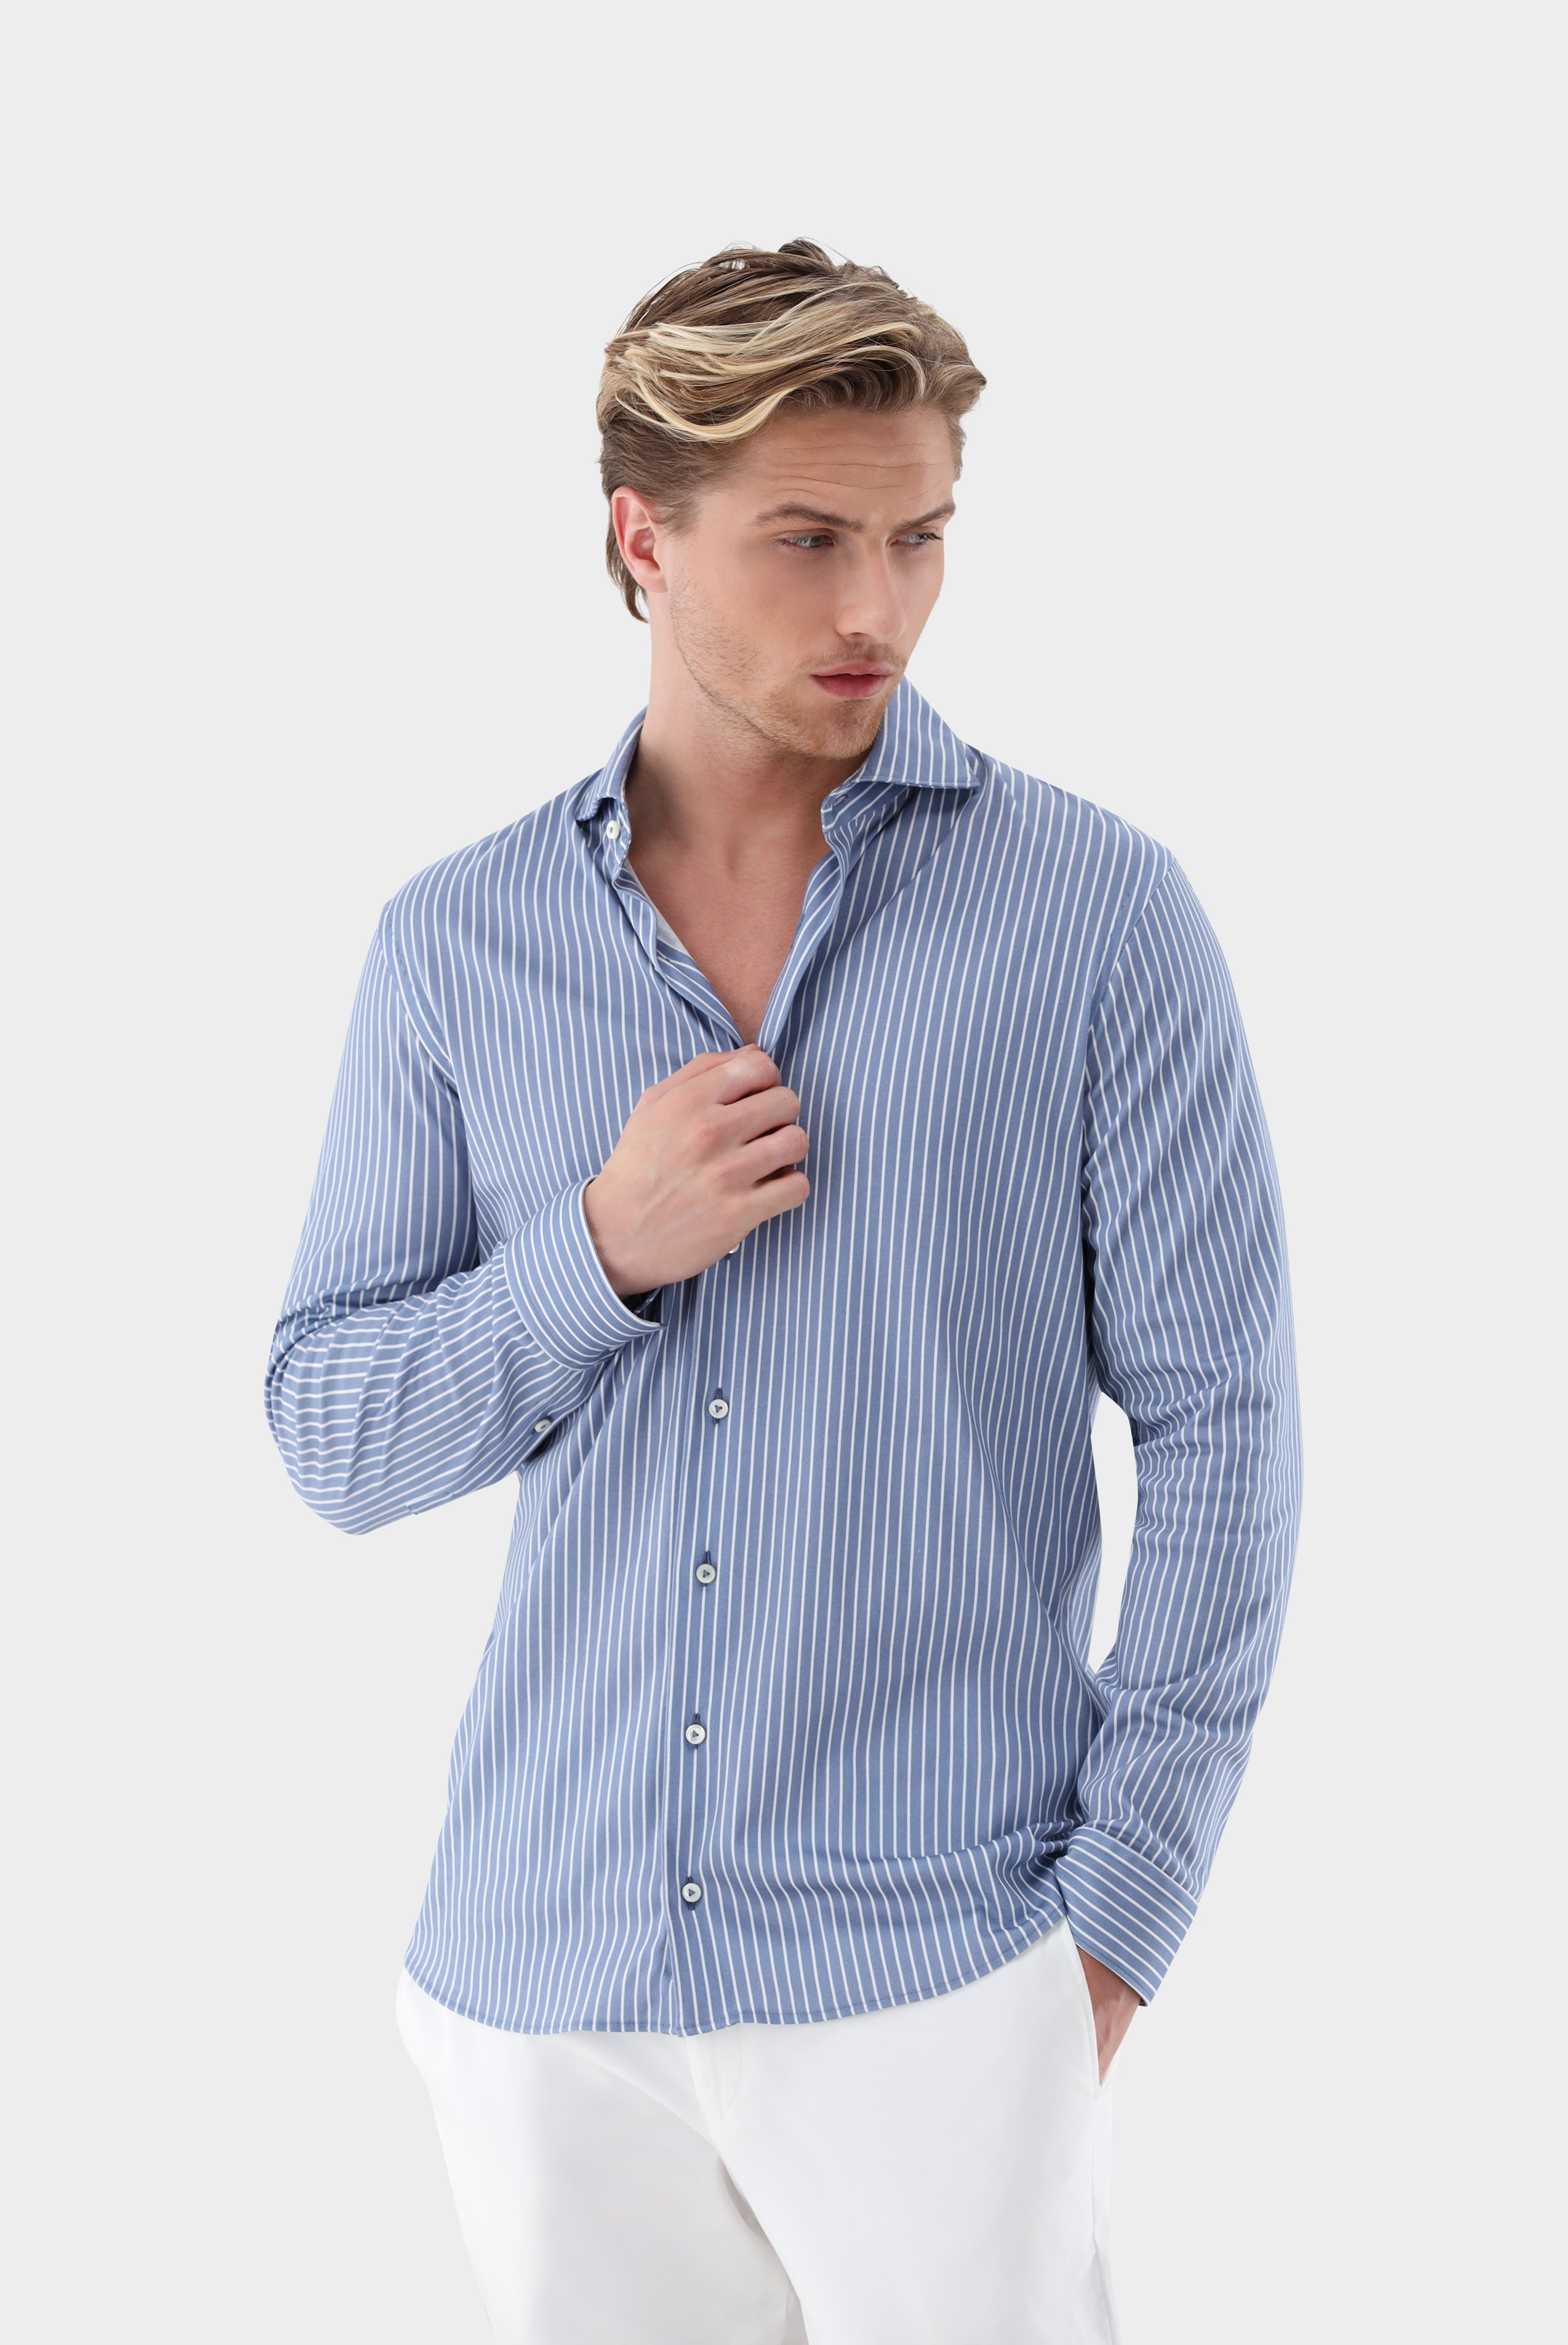 Jersey Pinstripe Print Shirt in Swiss Cotton